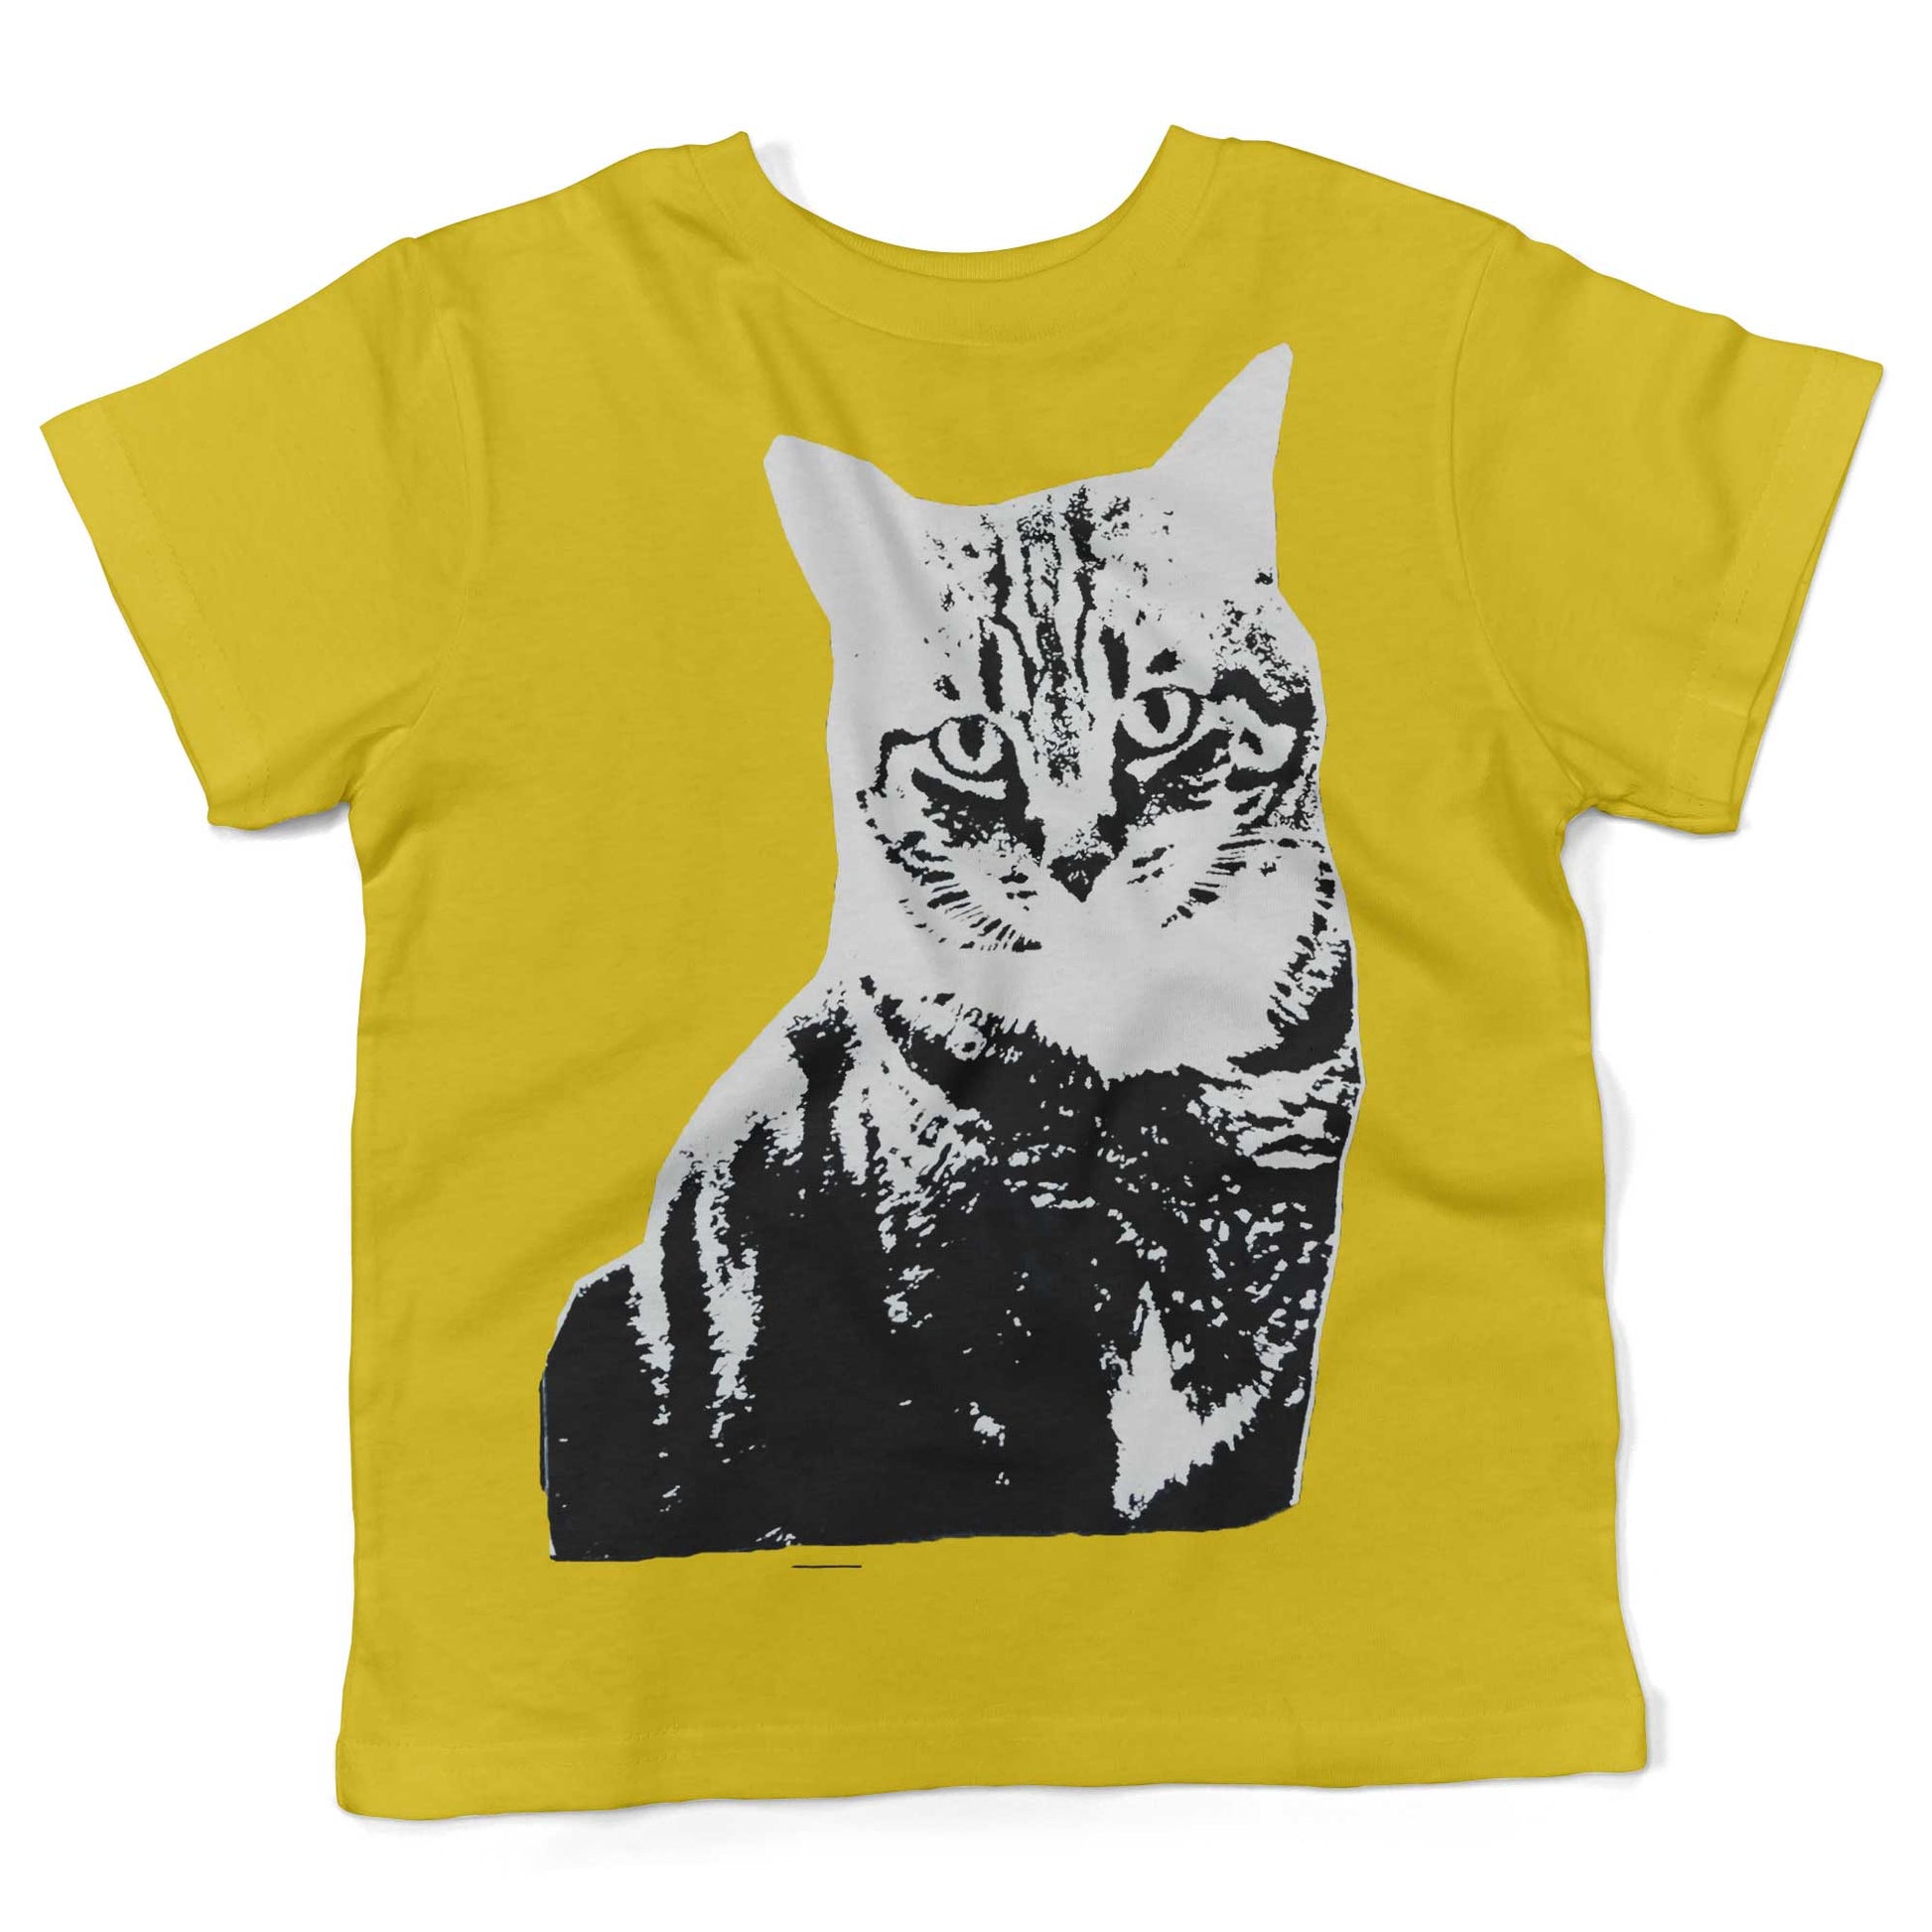 Black & White Cat Toddler Shirt-Sunshine Yellow-2T